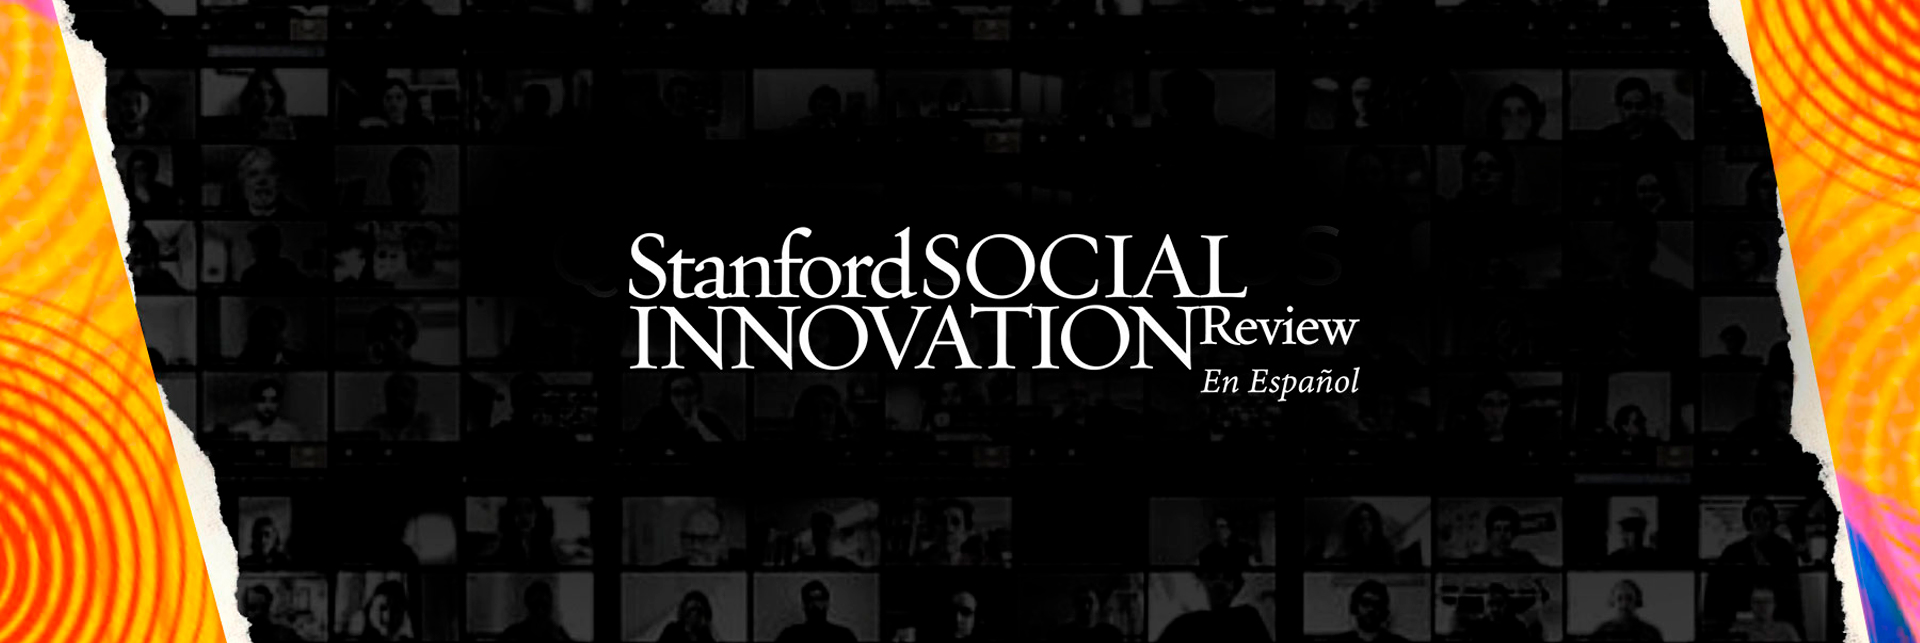 qué es stanford social innovation review